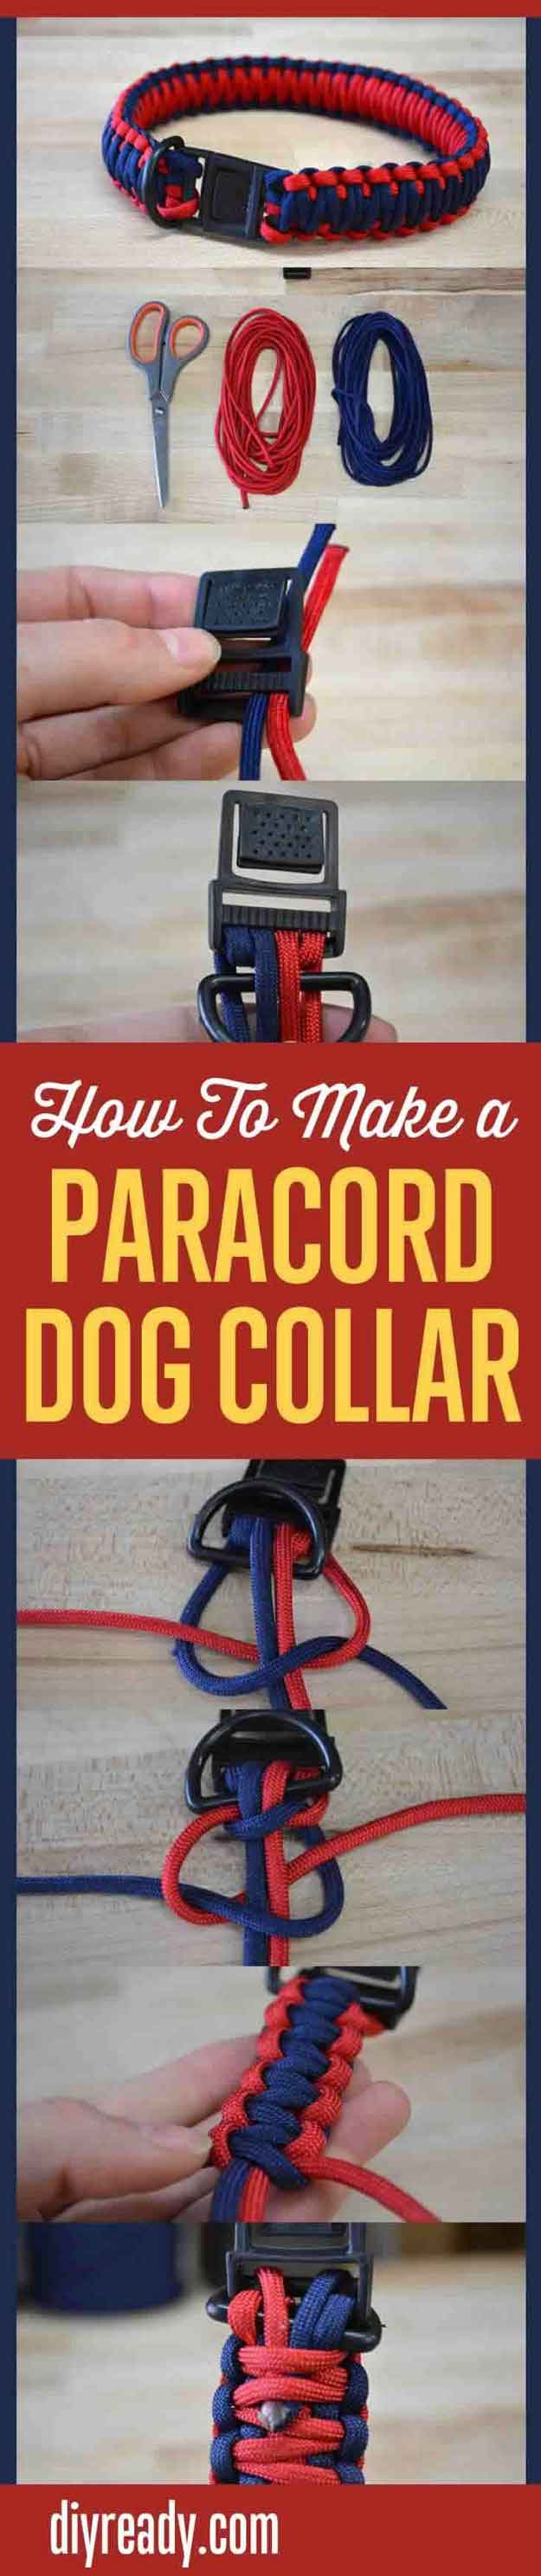 Paracord Dog Collar | DIY Dog Crafts Man’s Best Friend Will Love 